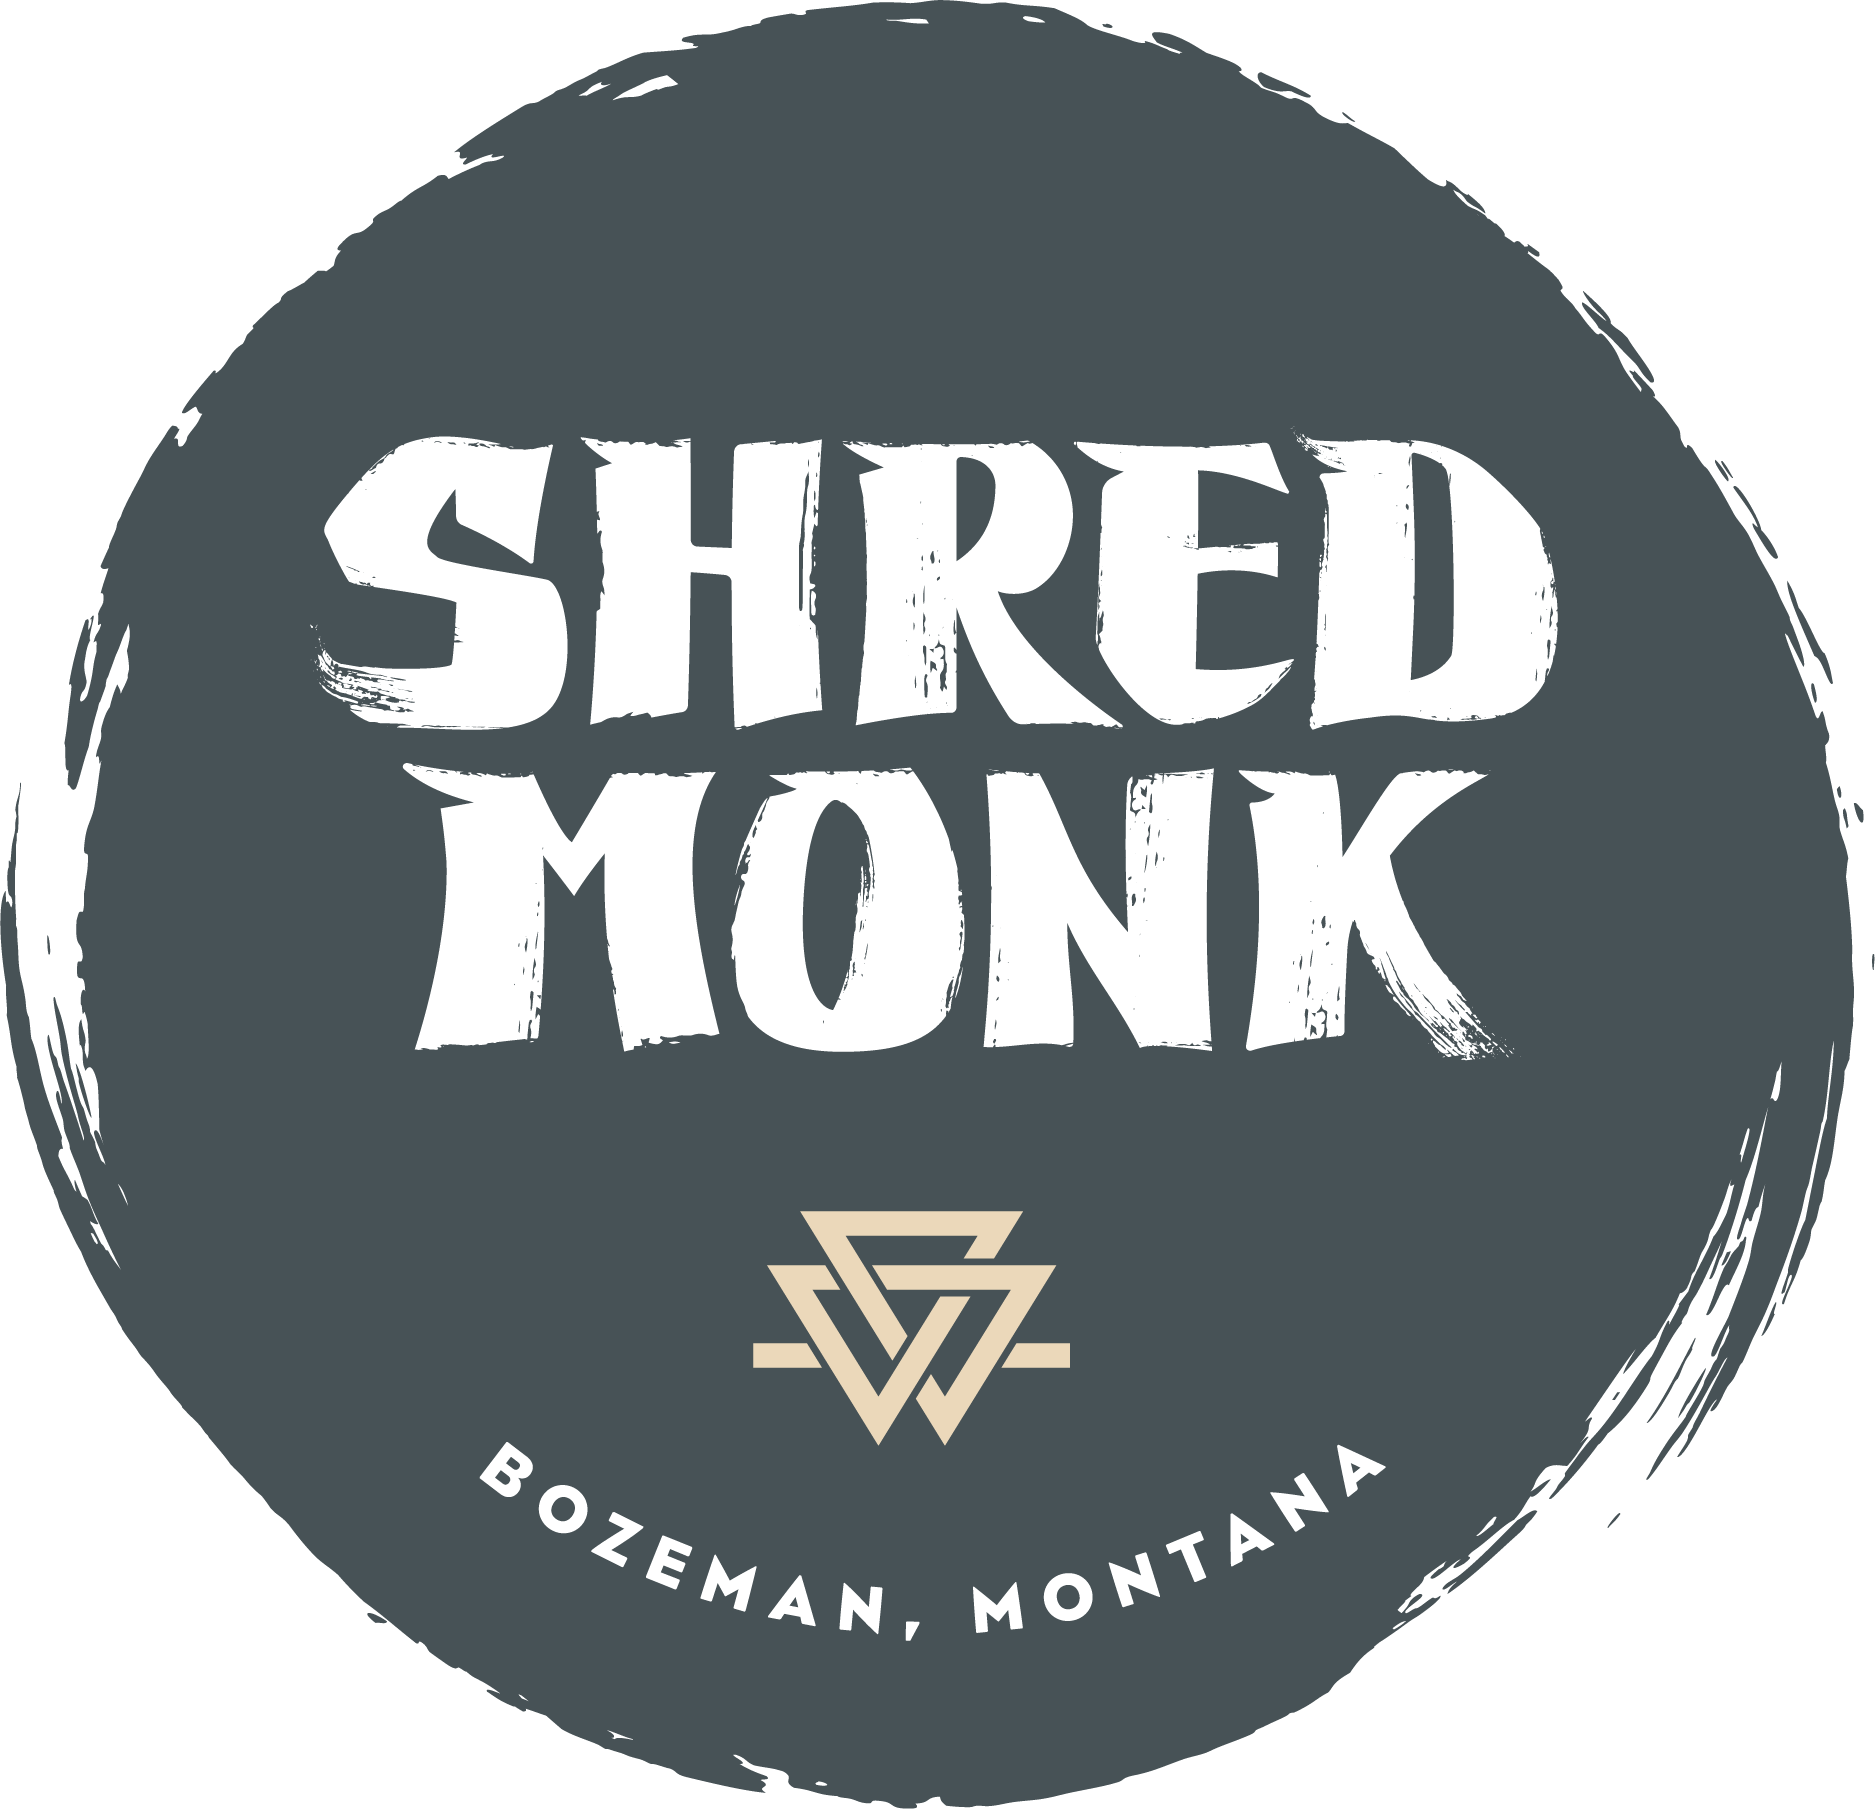 Shred Monk logo.png